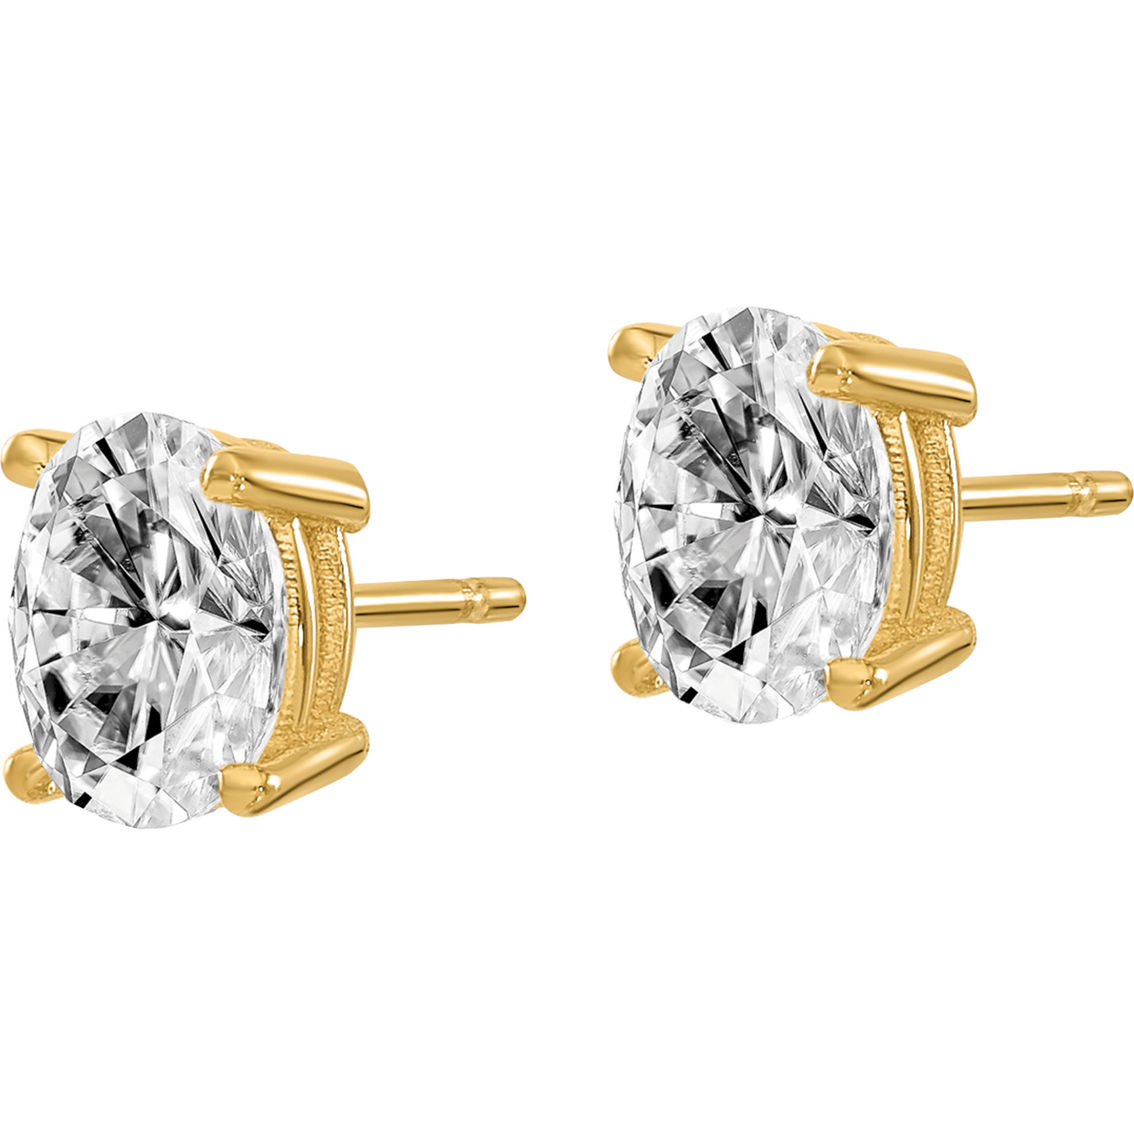 True Origin 14K Gold 1 CTW Lab Grown Diamond Oval Solitaire Earrings, Certified - Image 2 of 4